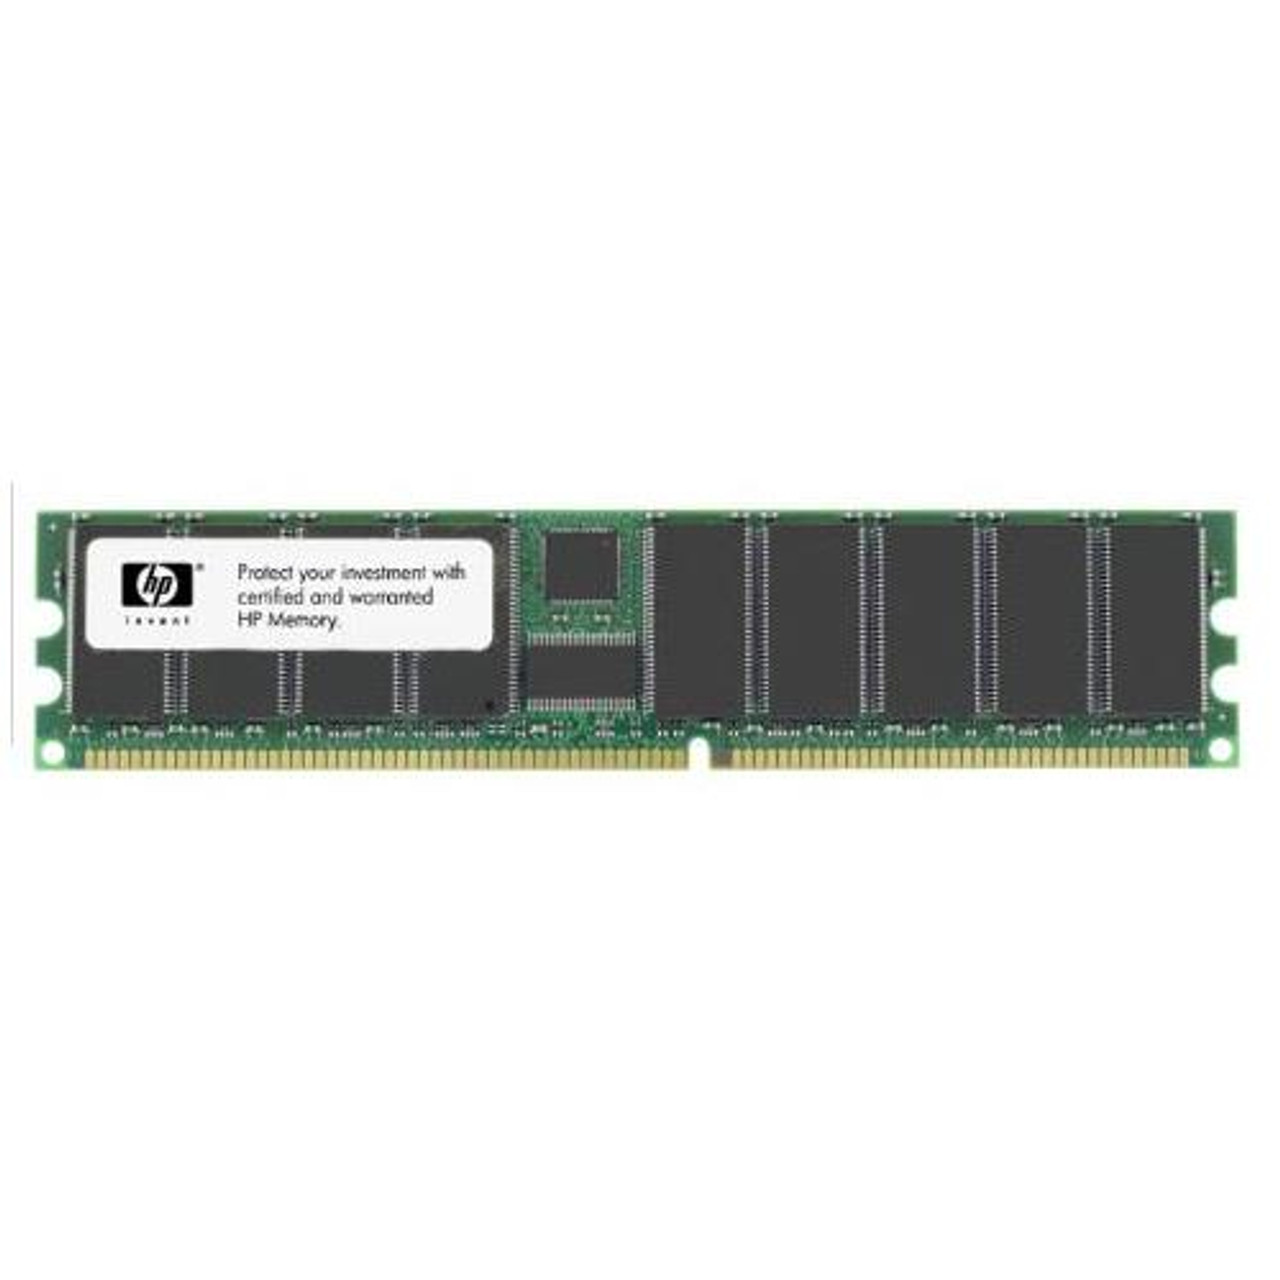 351658-001 HP 1GB DDR ECC PC-3200 400Mhz